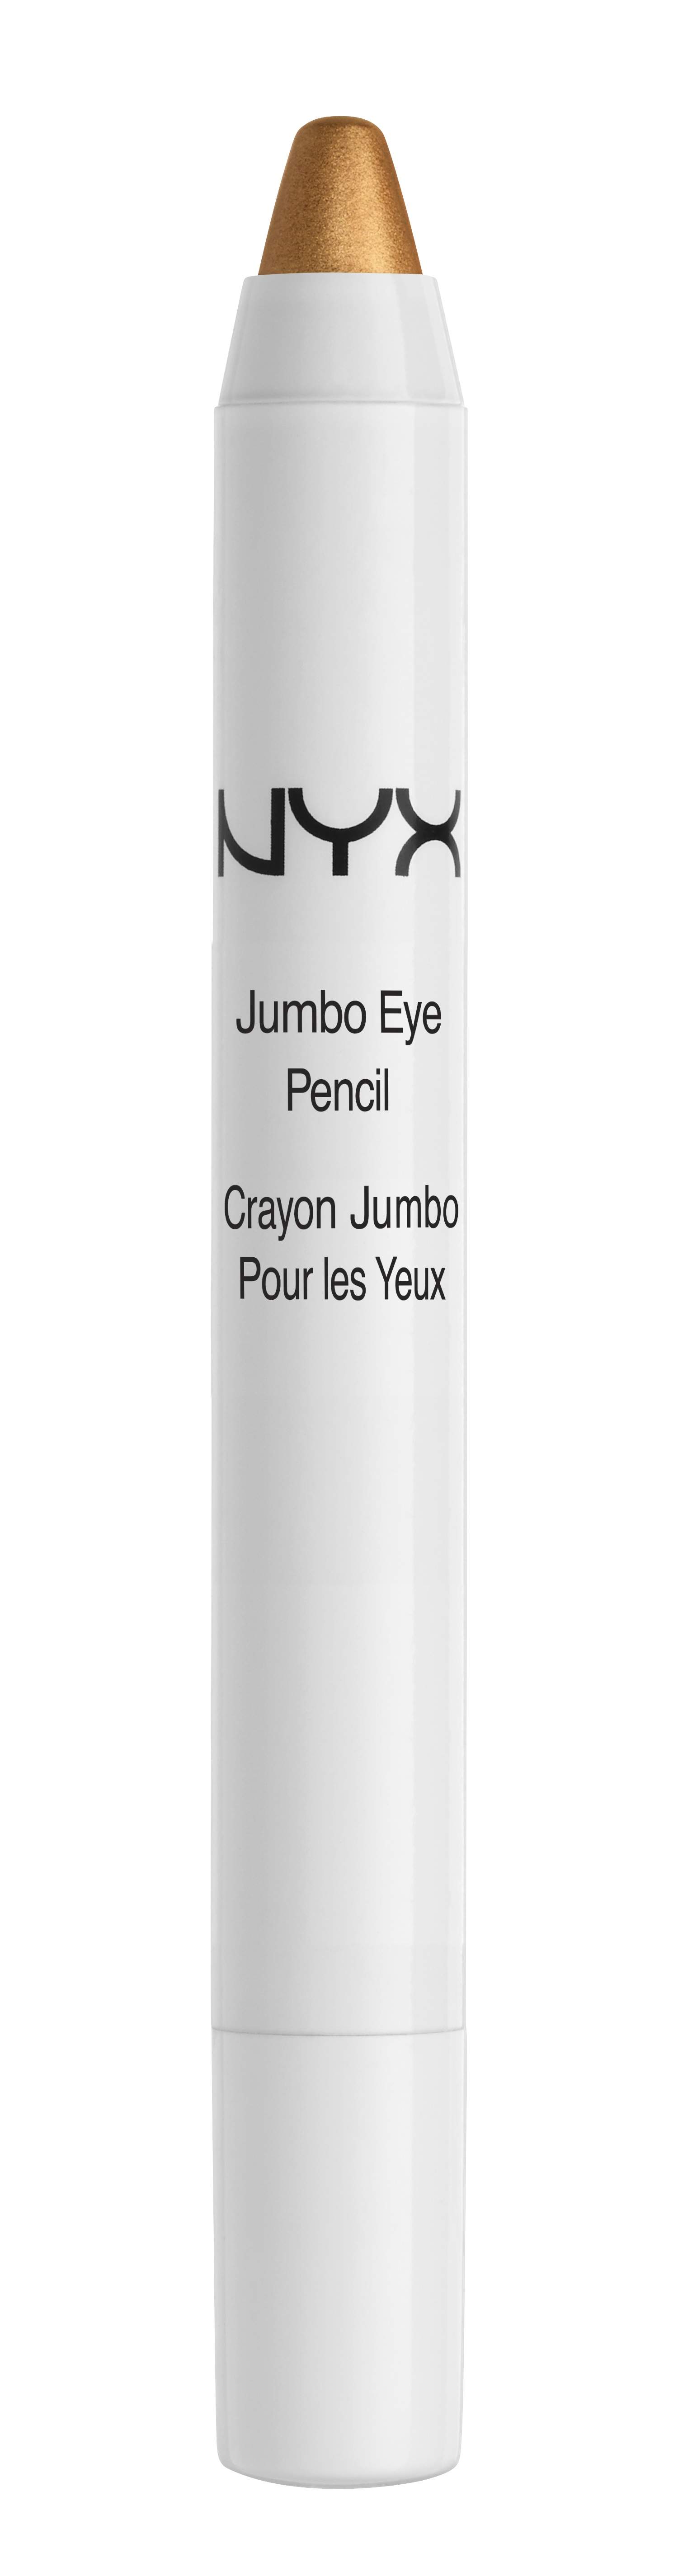 Nyx Jumbo Eye Pencil in Gold, Rs 550